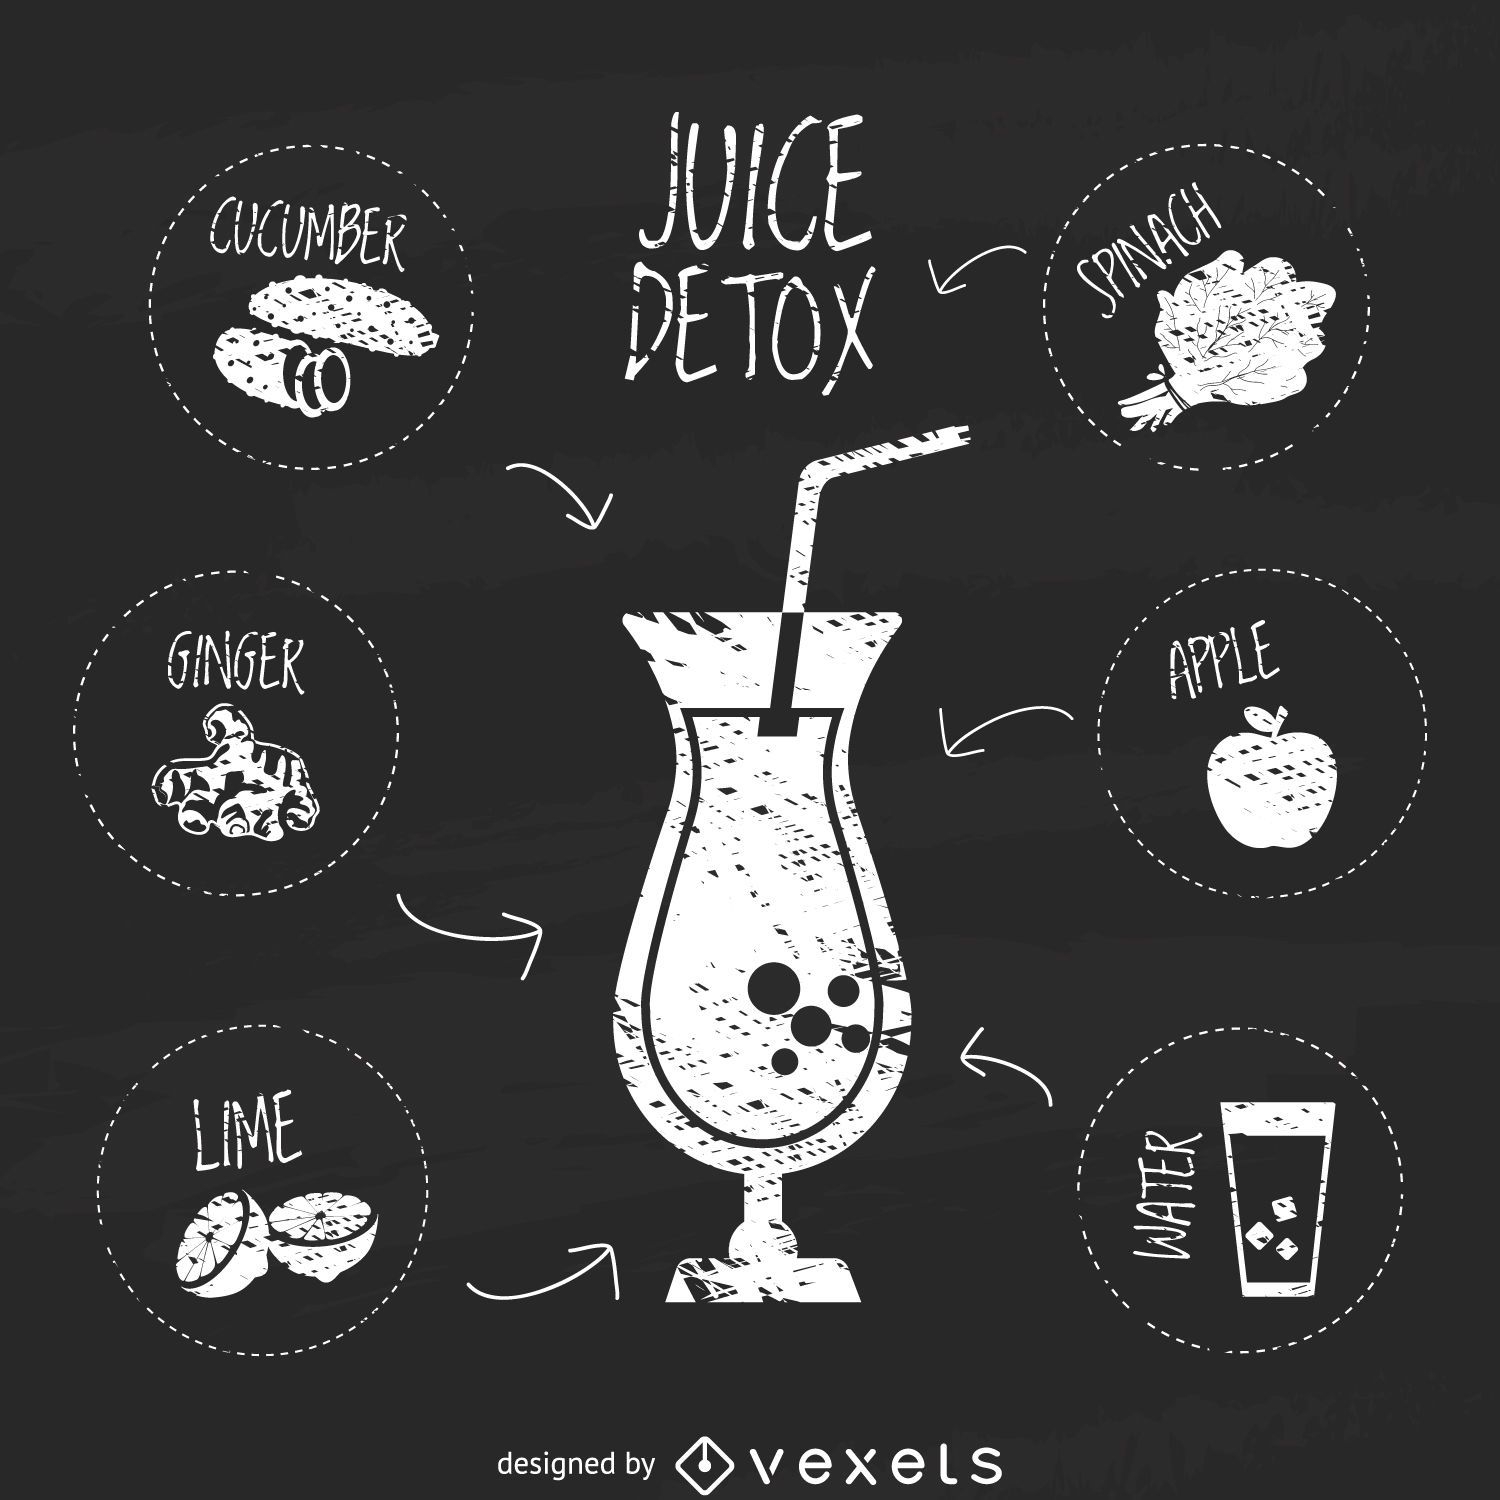 Chalk detox juice recipe